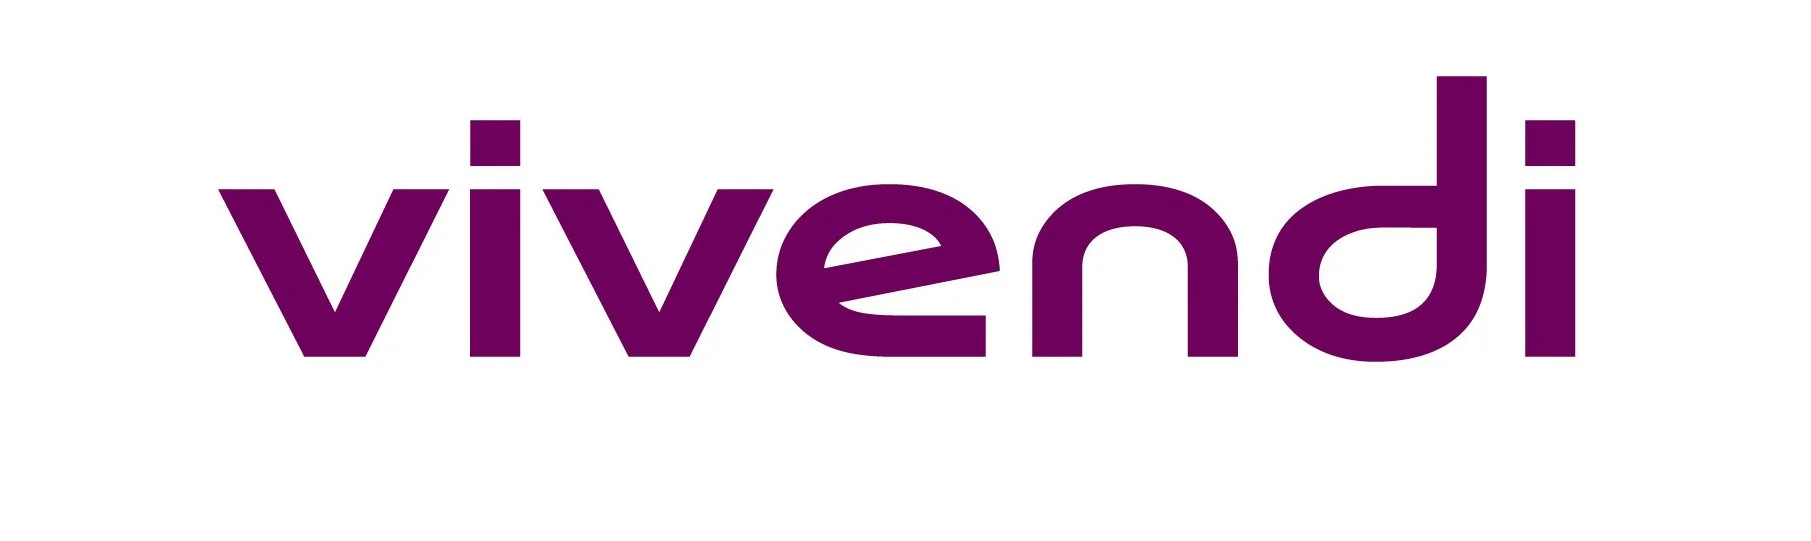 Vivendi скупает акции Ubisoft, руководство компании обеспокоено - фото 1